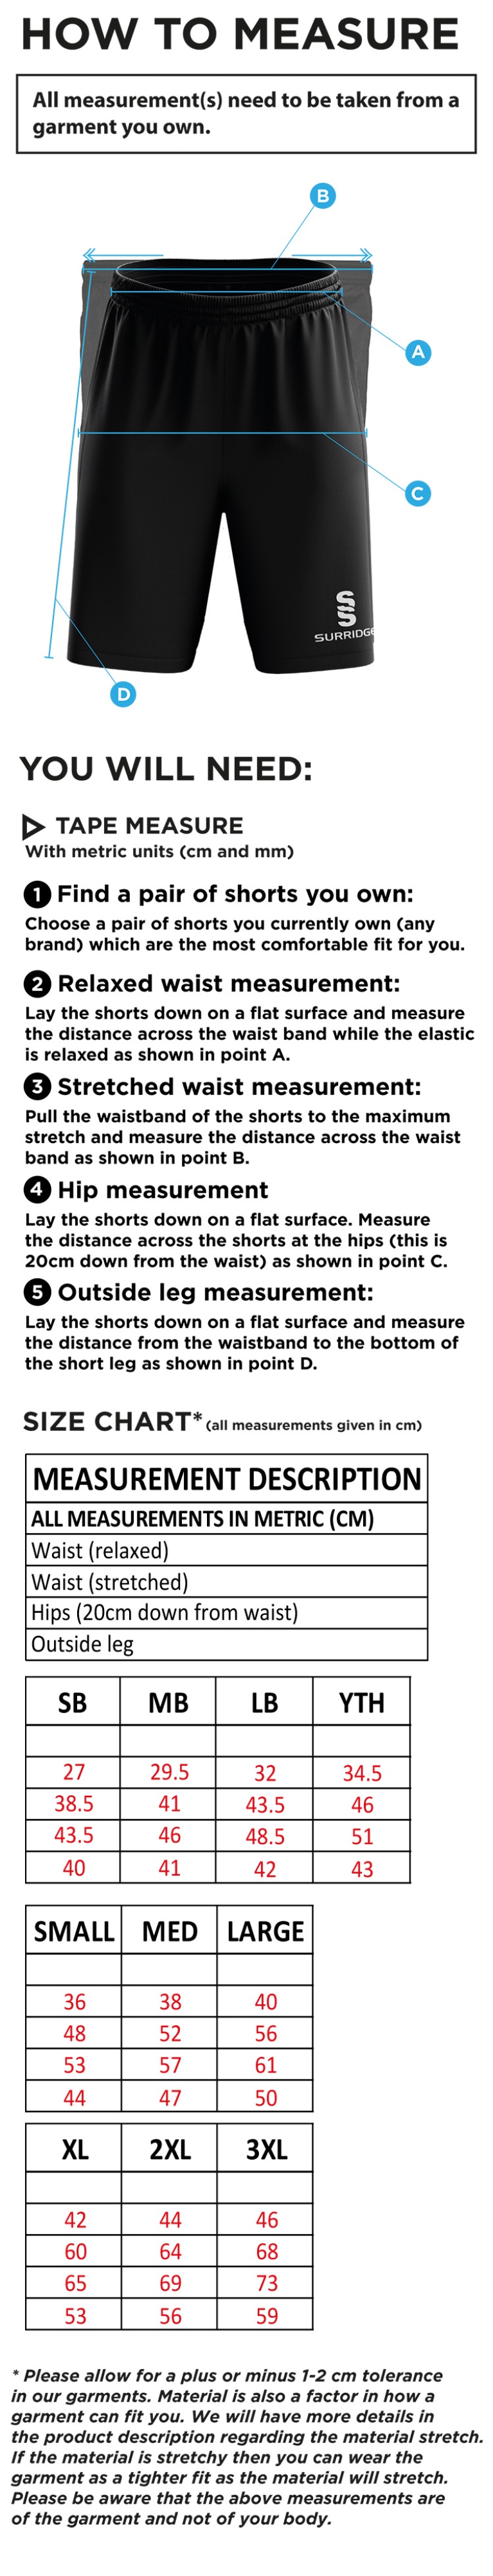 Eridge CC - Blade Shorts - Size Guide